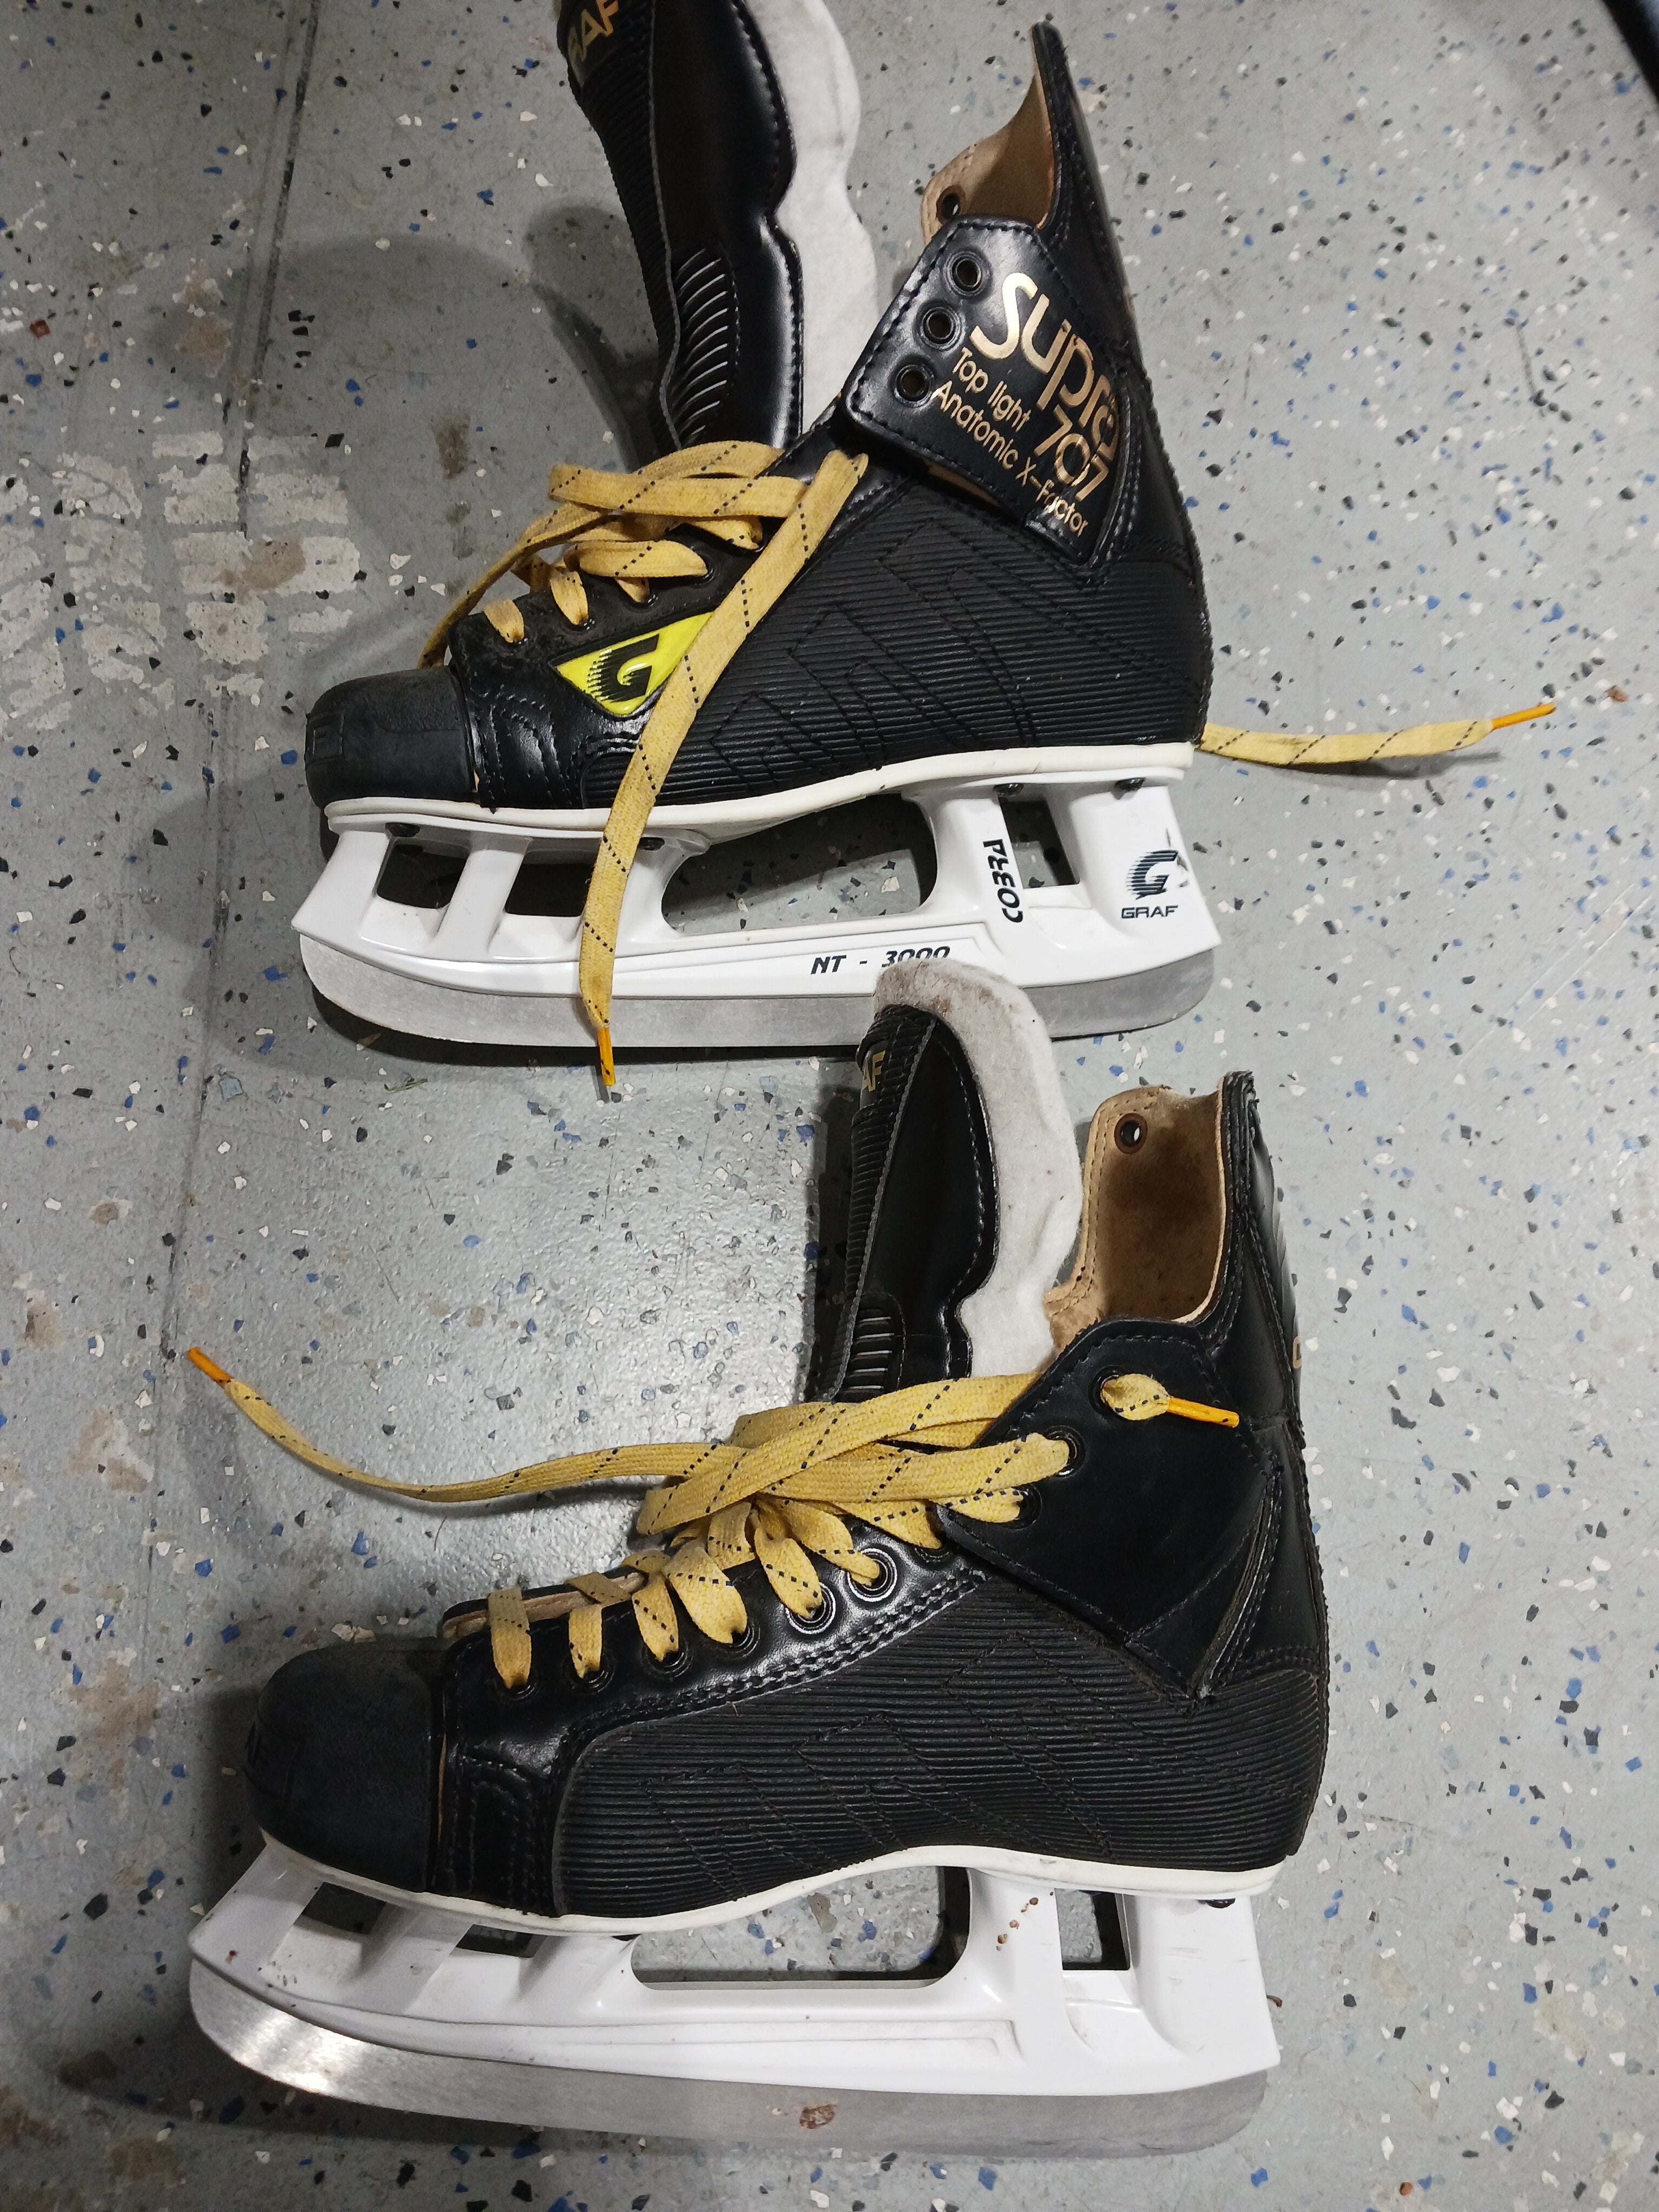 Junior Used Graf Supra 707 Hockey Skates Regular Width Size 5 